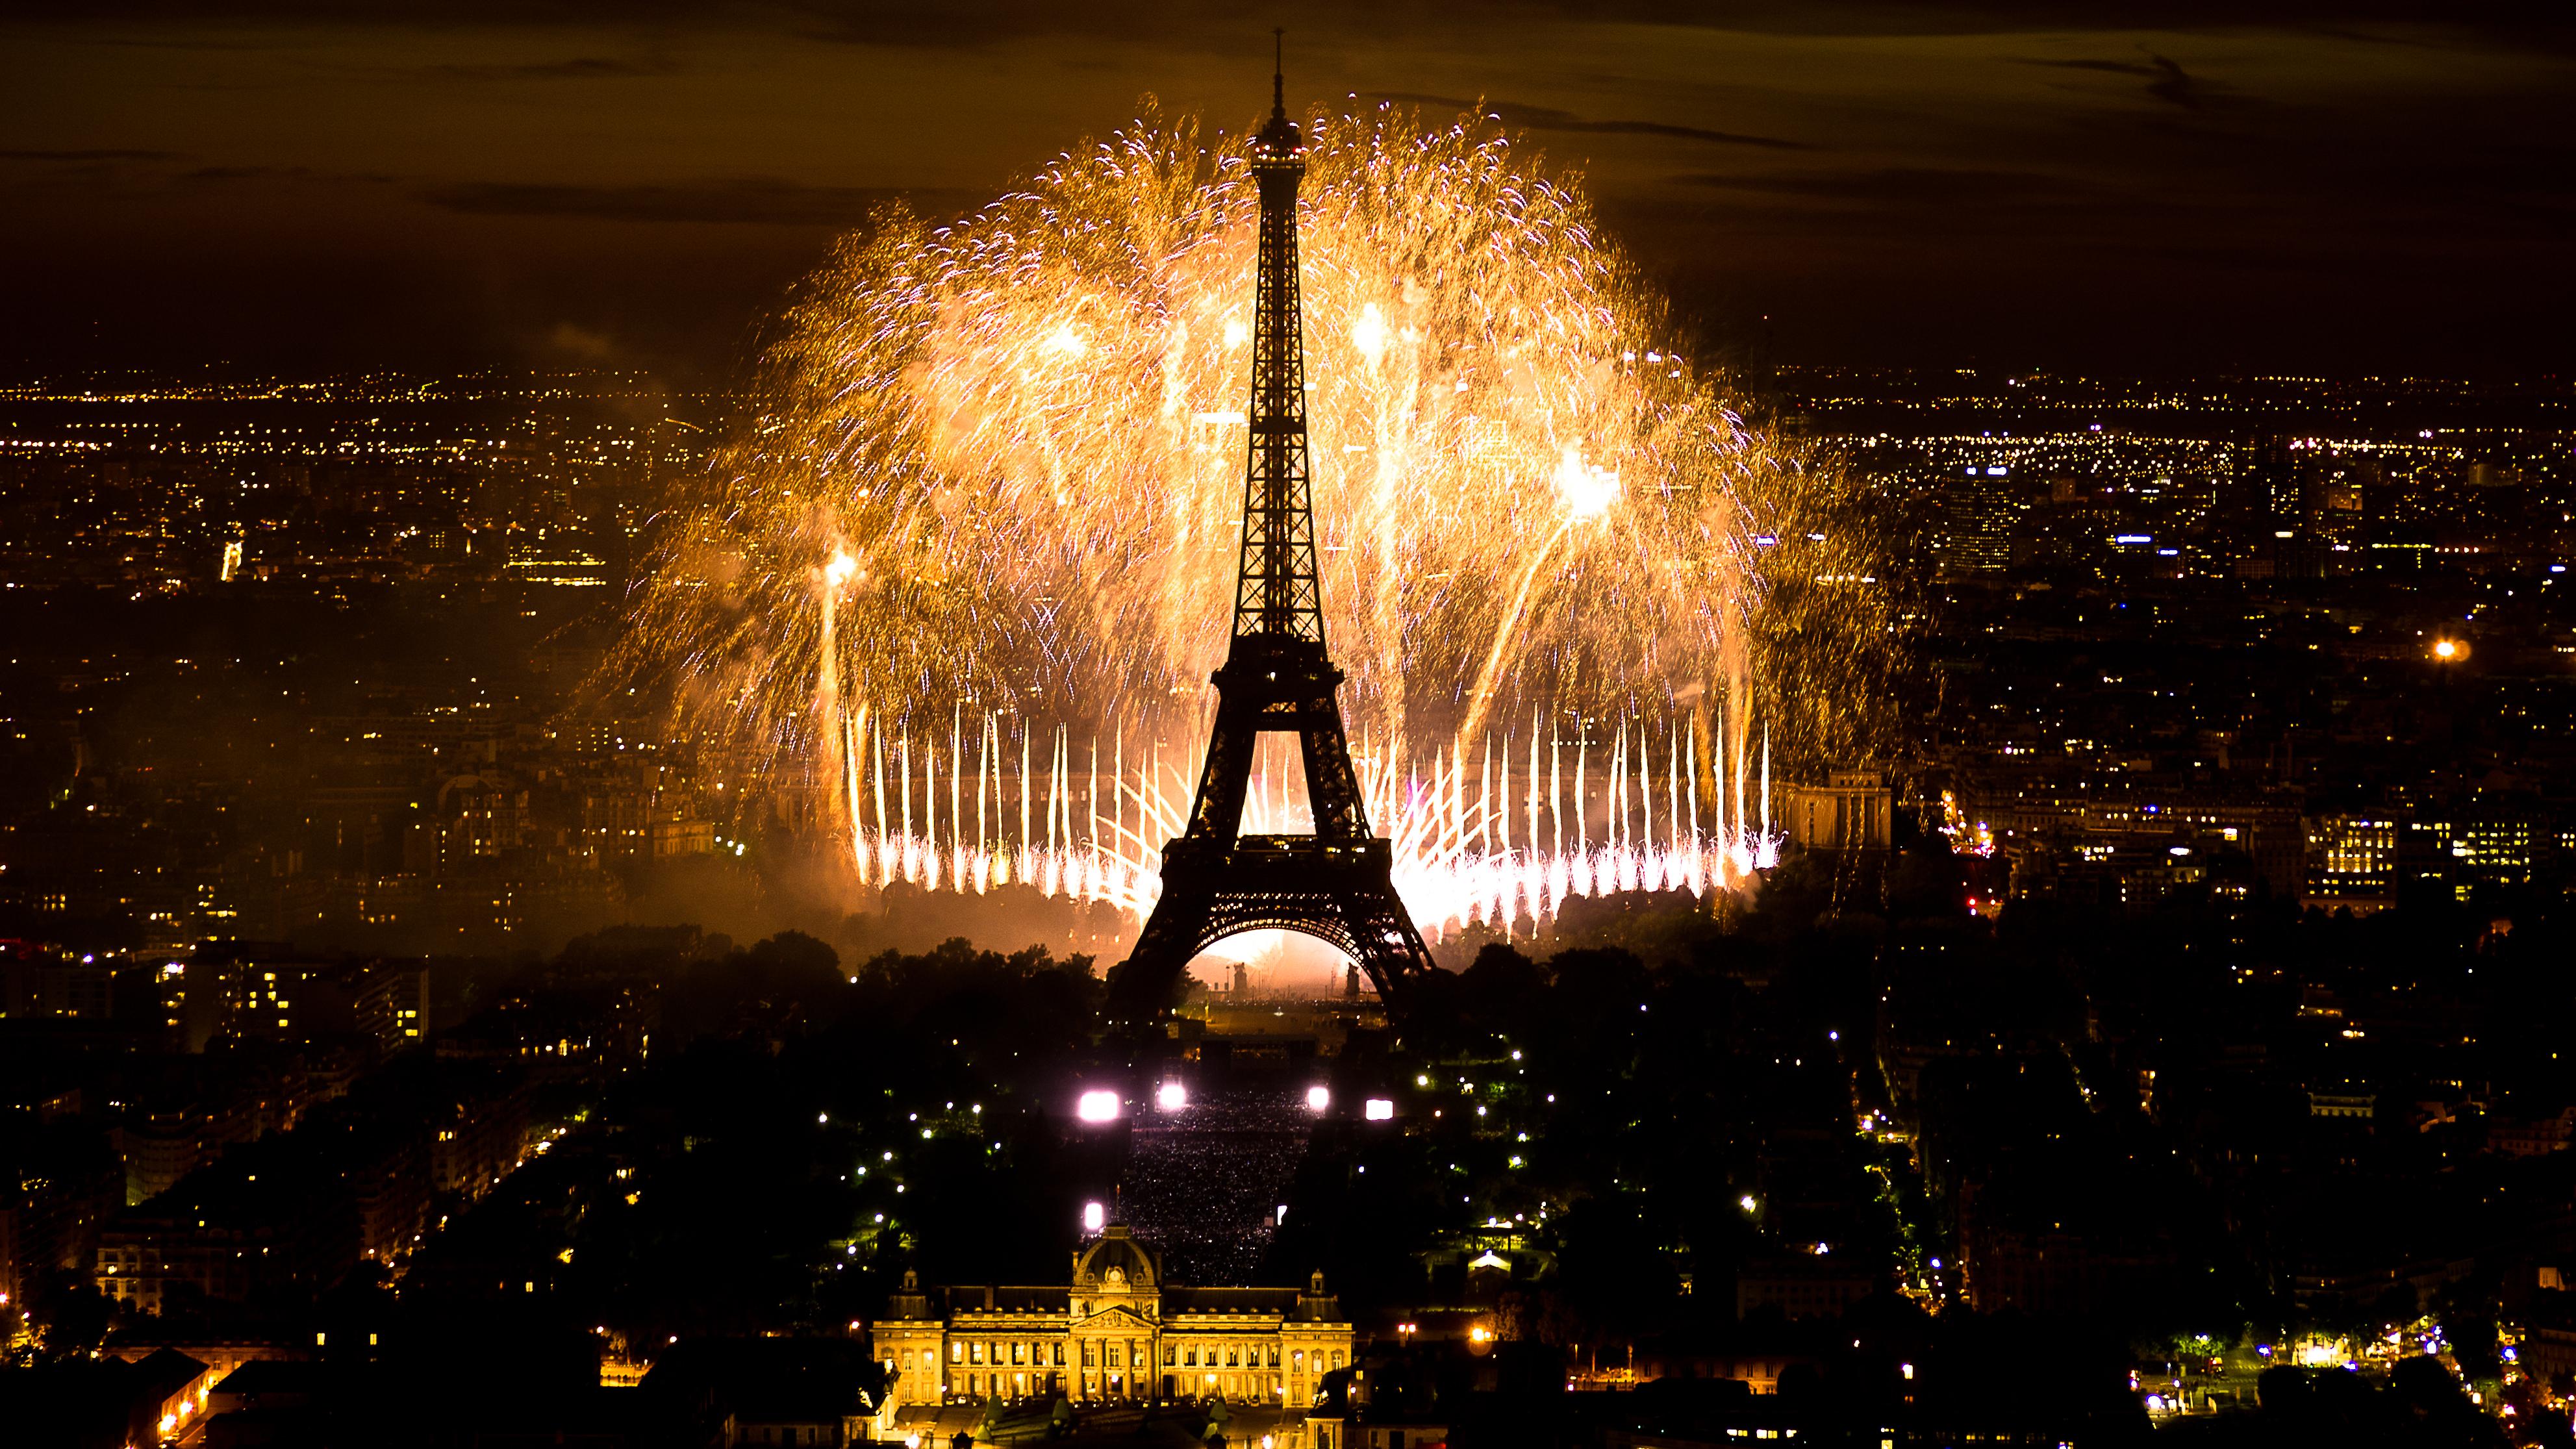 Какой год в париже. Париж Елисейские поля Эйфелева башня. Париж Елисейские поля Эйфелева башня ночью. Париж Эйфелева башня ночью салют. Франция сейчас Эйфелева башня ночью.